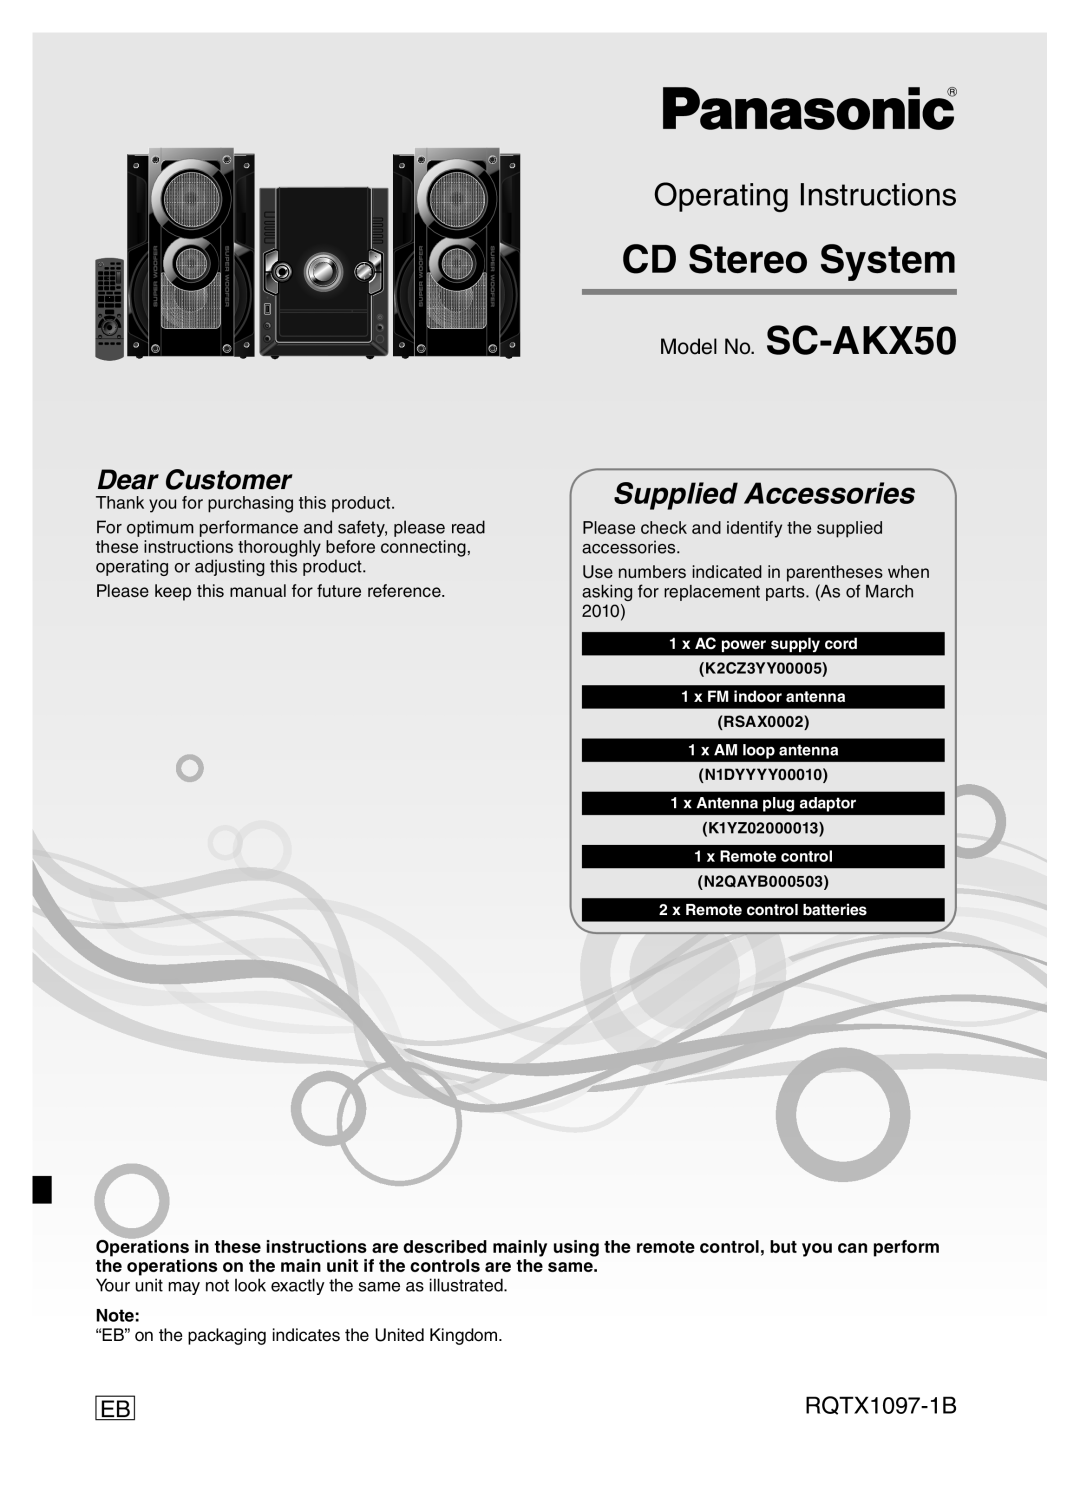 Panasonic SC-AKX50 operating instructions CD Stereo System 